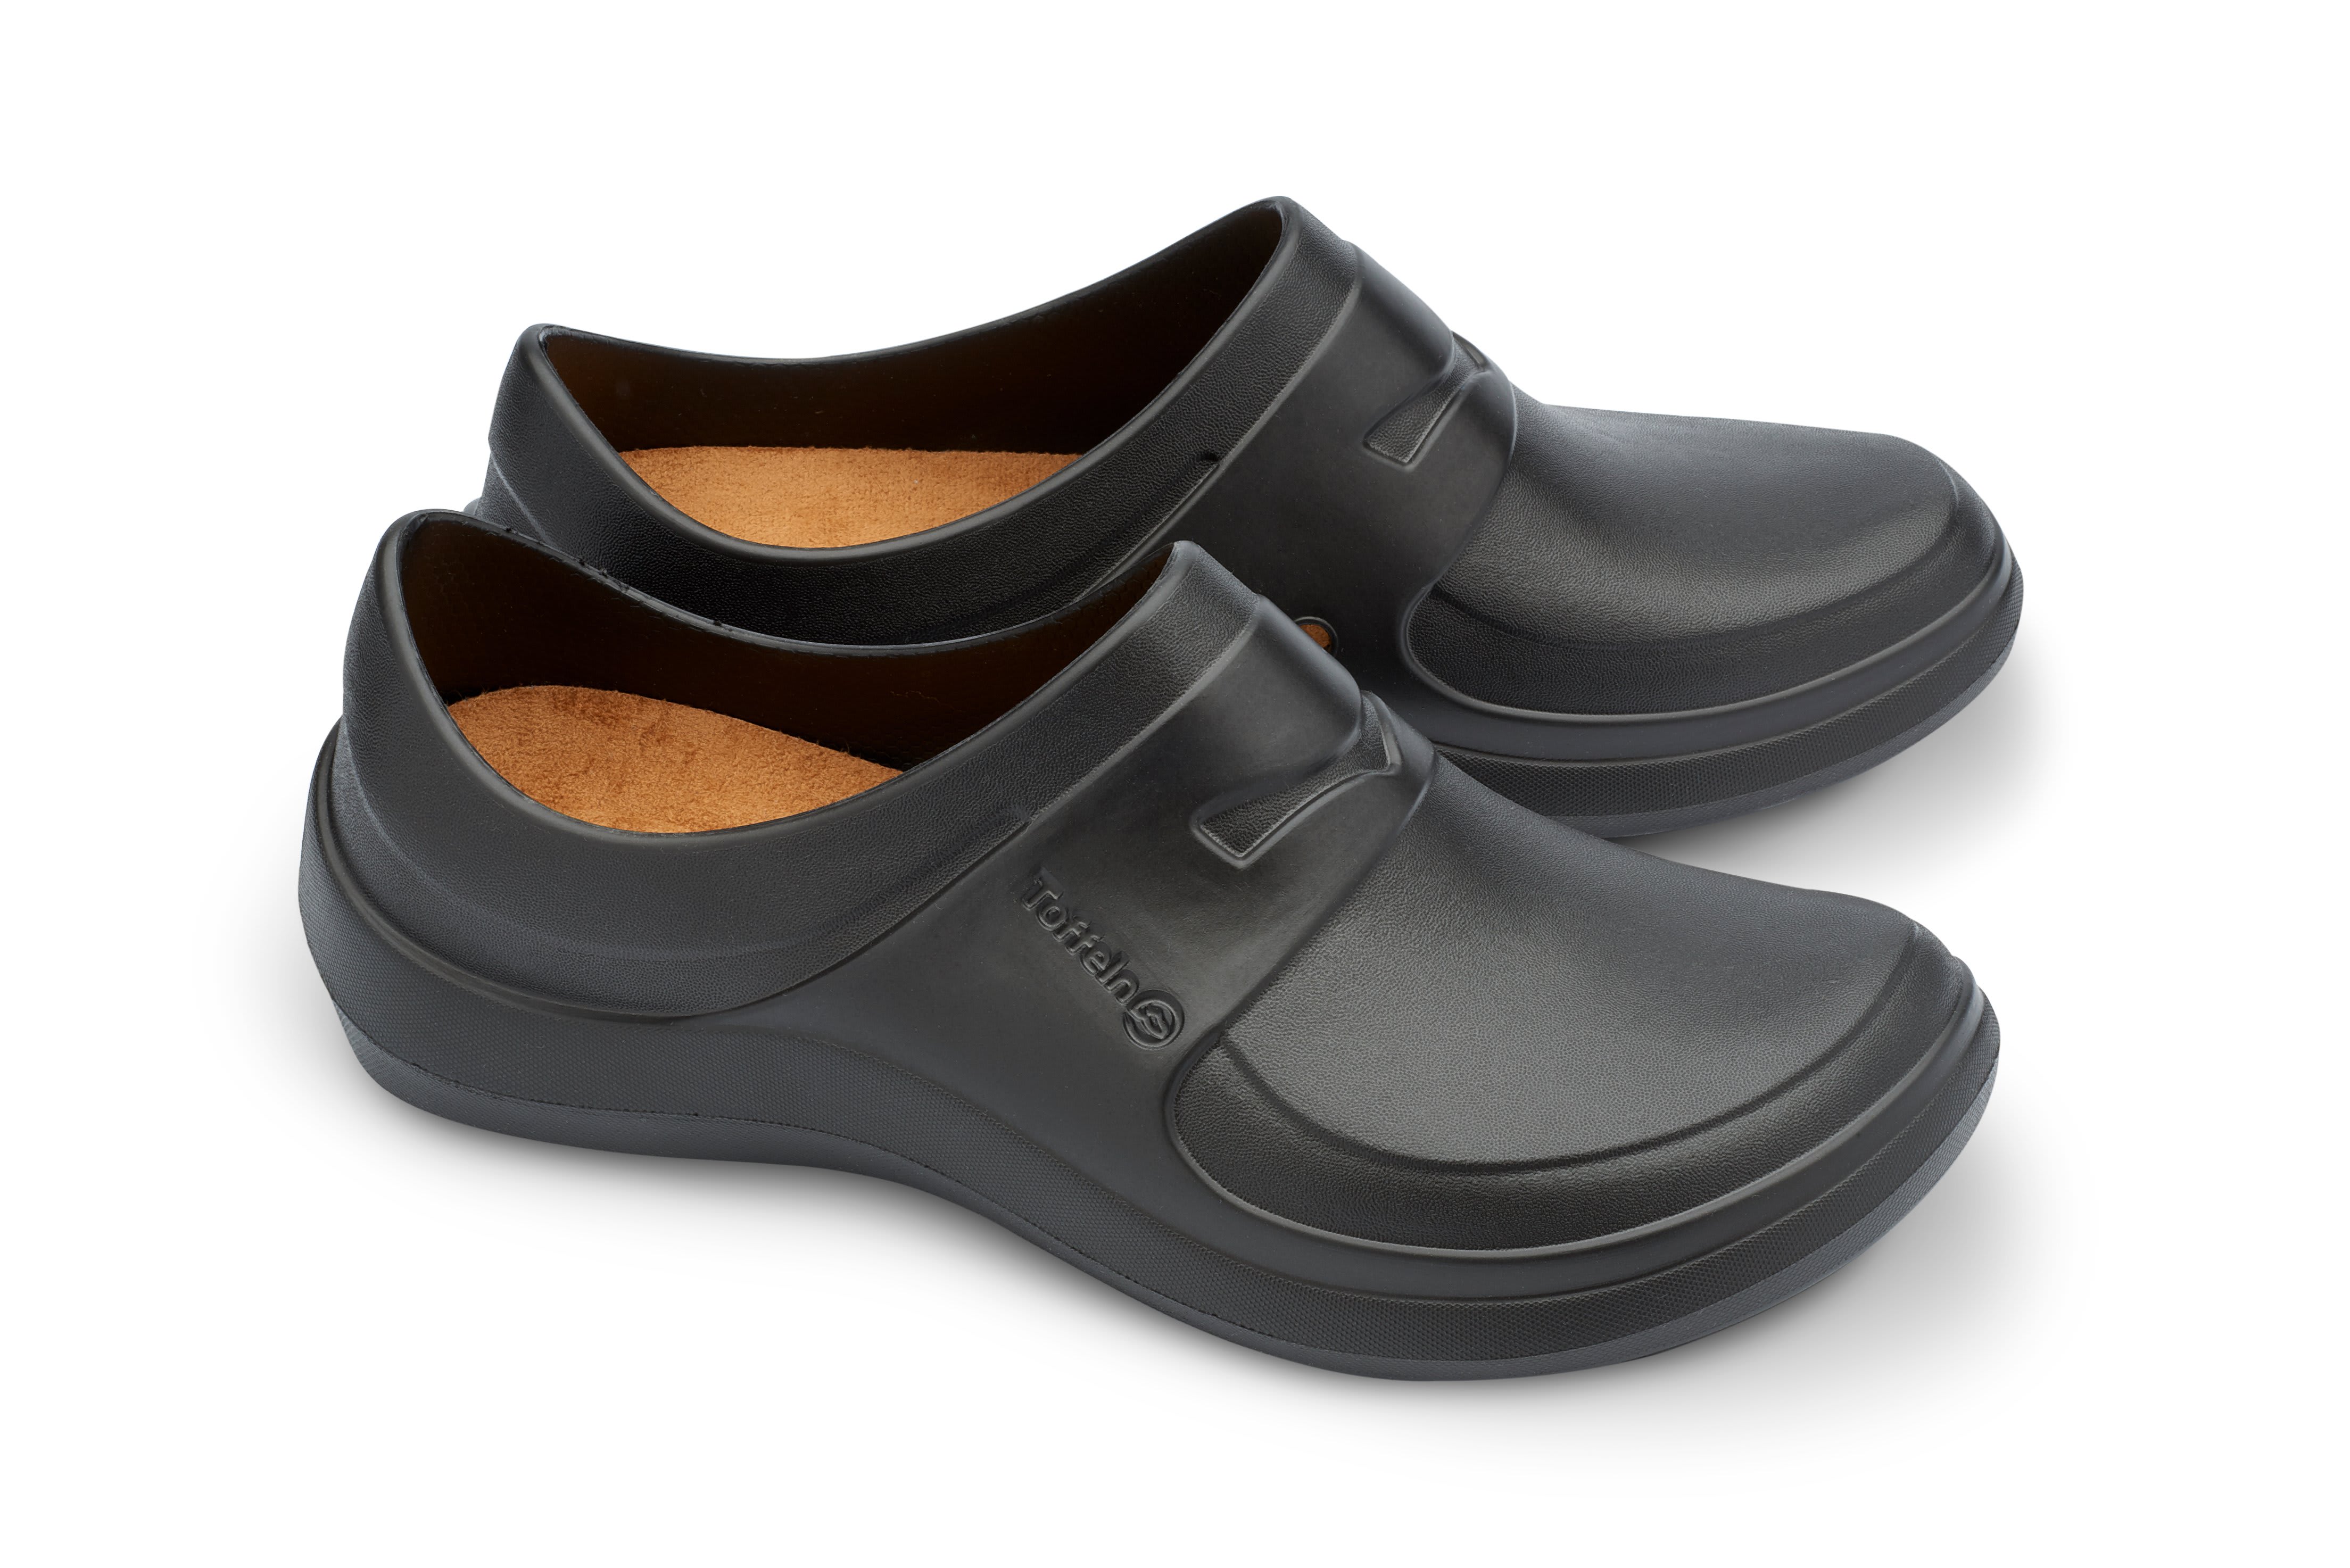 Toffeln AktivLite | Comfortable & Lightweight Nursing Shoes